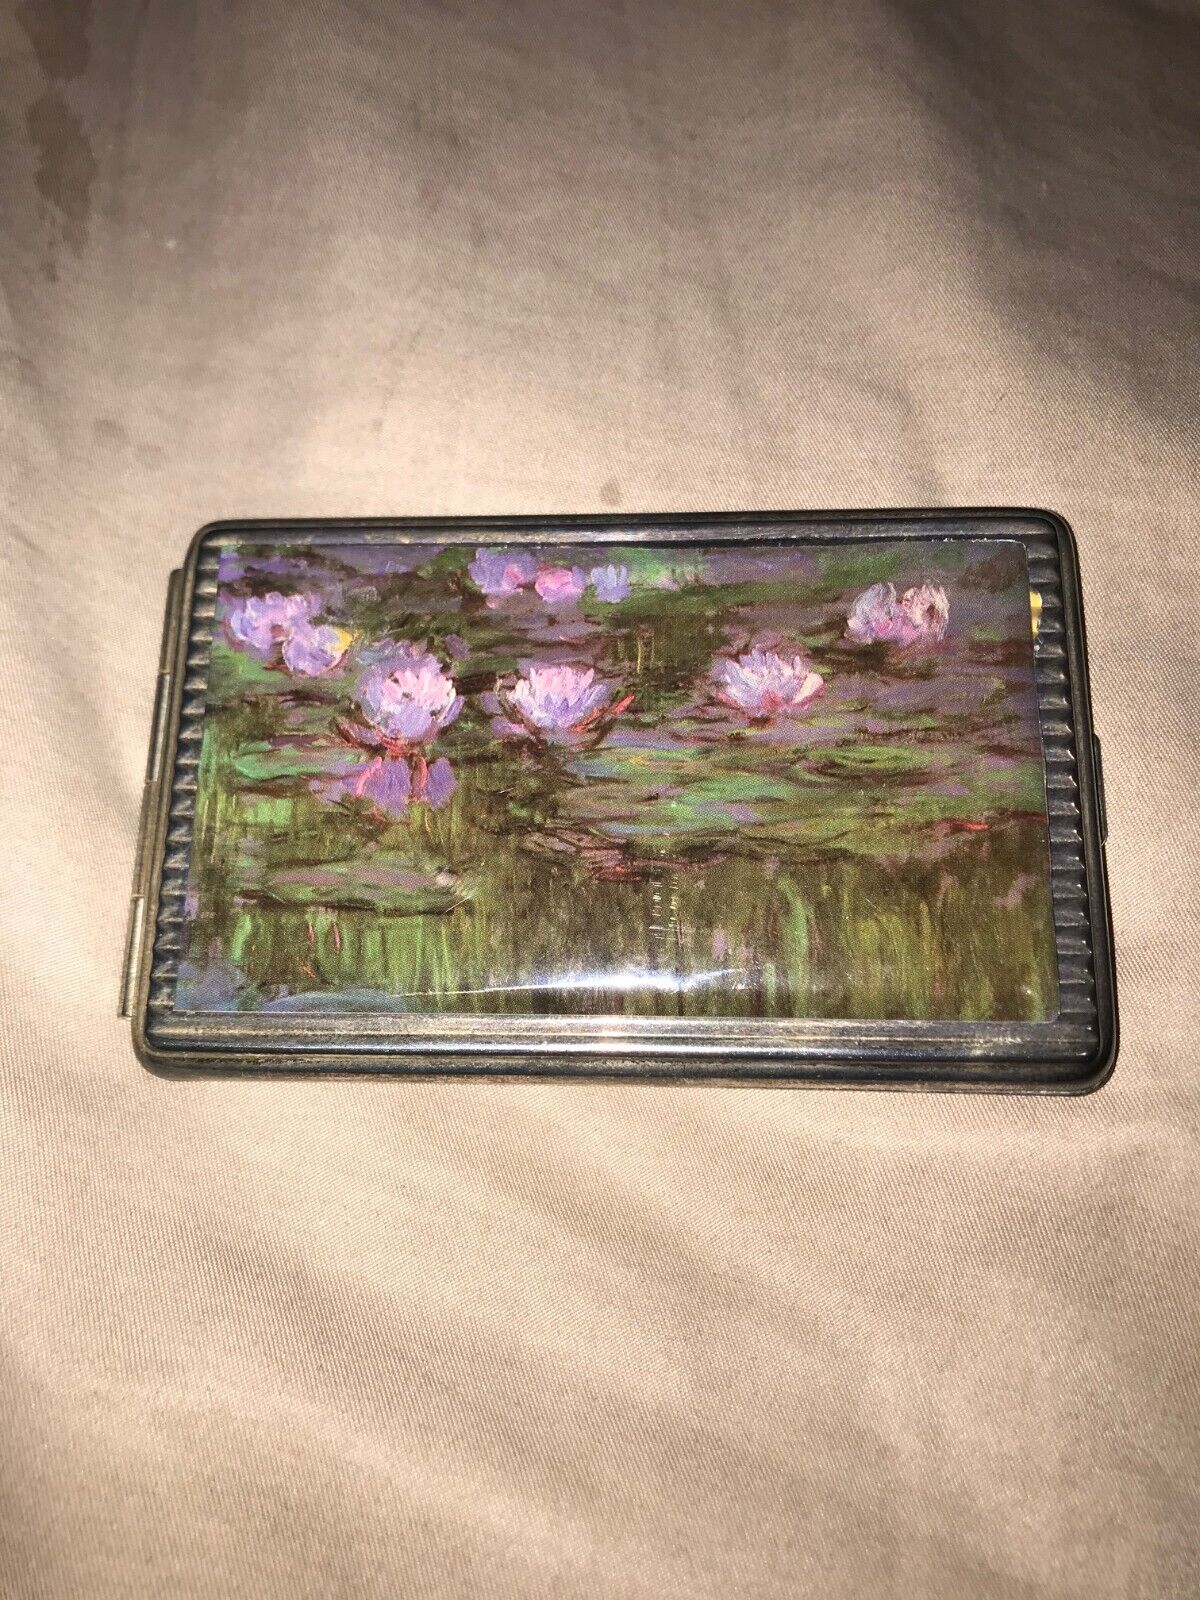 Retro Snap Shut Mirror Compact Telephone Address Book Combo Monet Water Lilies